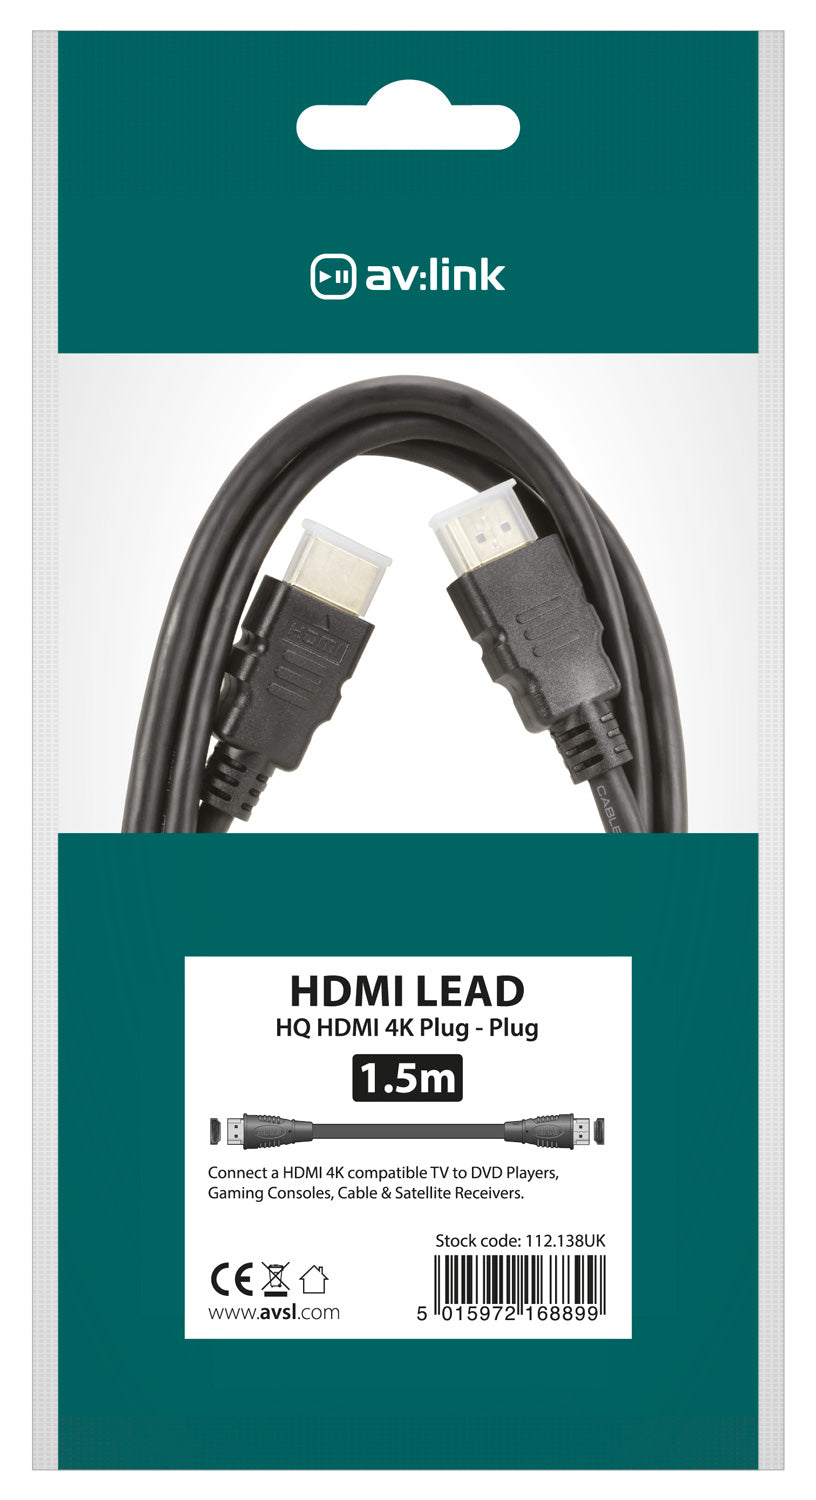 High Quality 4K Ready HDMI Lead - Plug to Plug